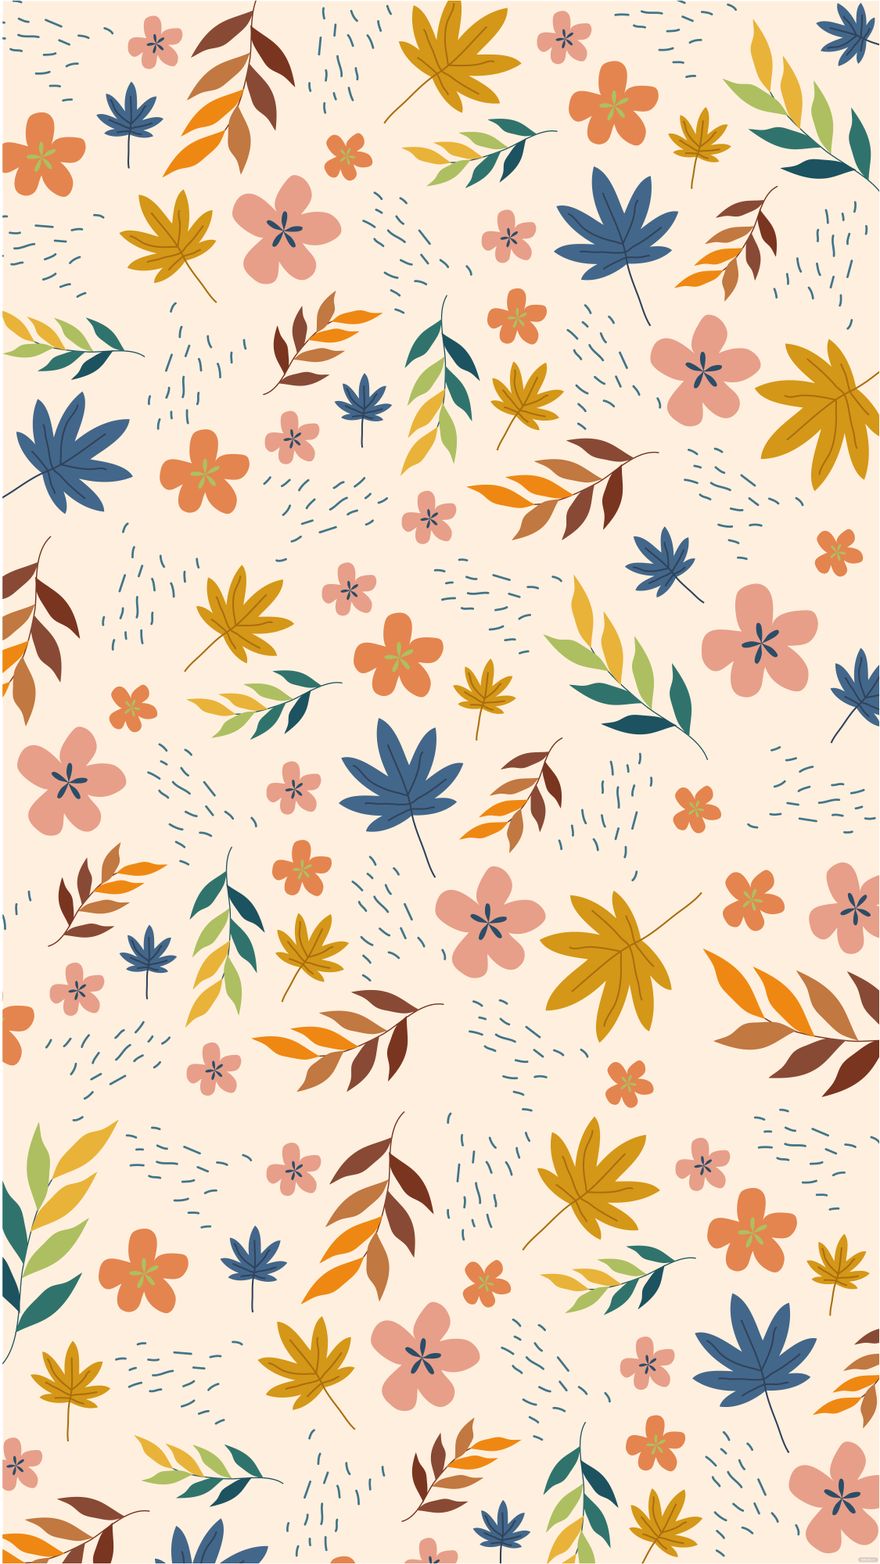 Free Autumn Floral Background Template in Illustrator, EPS, SVG, JPG